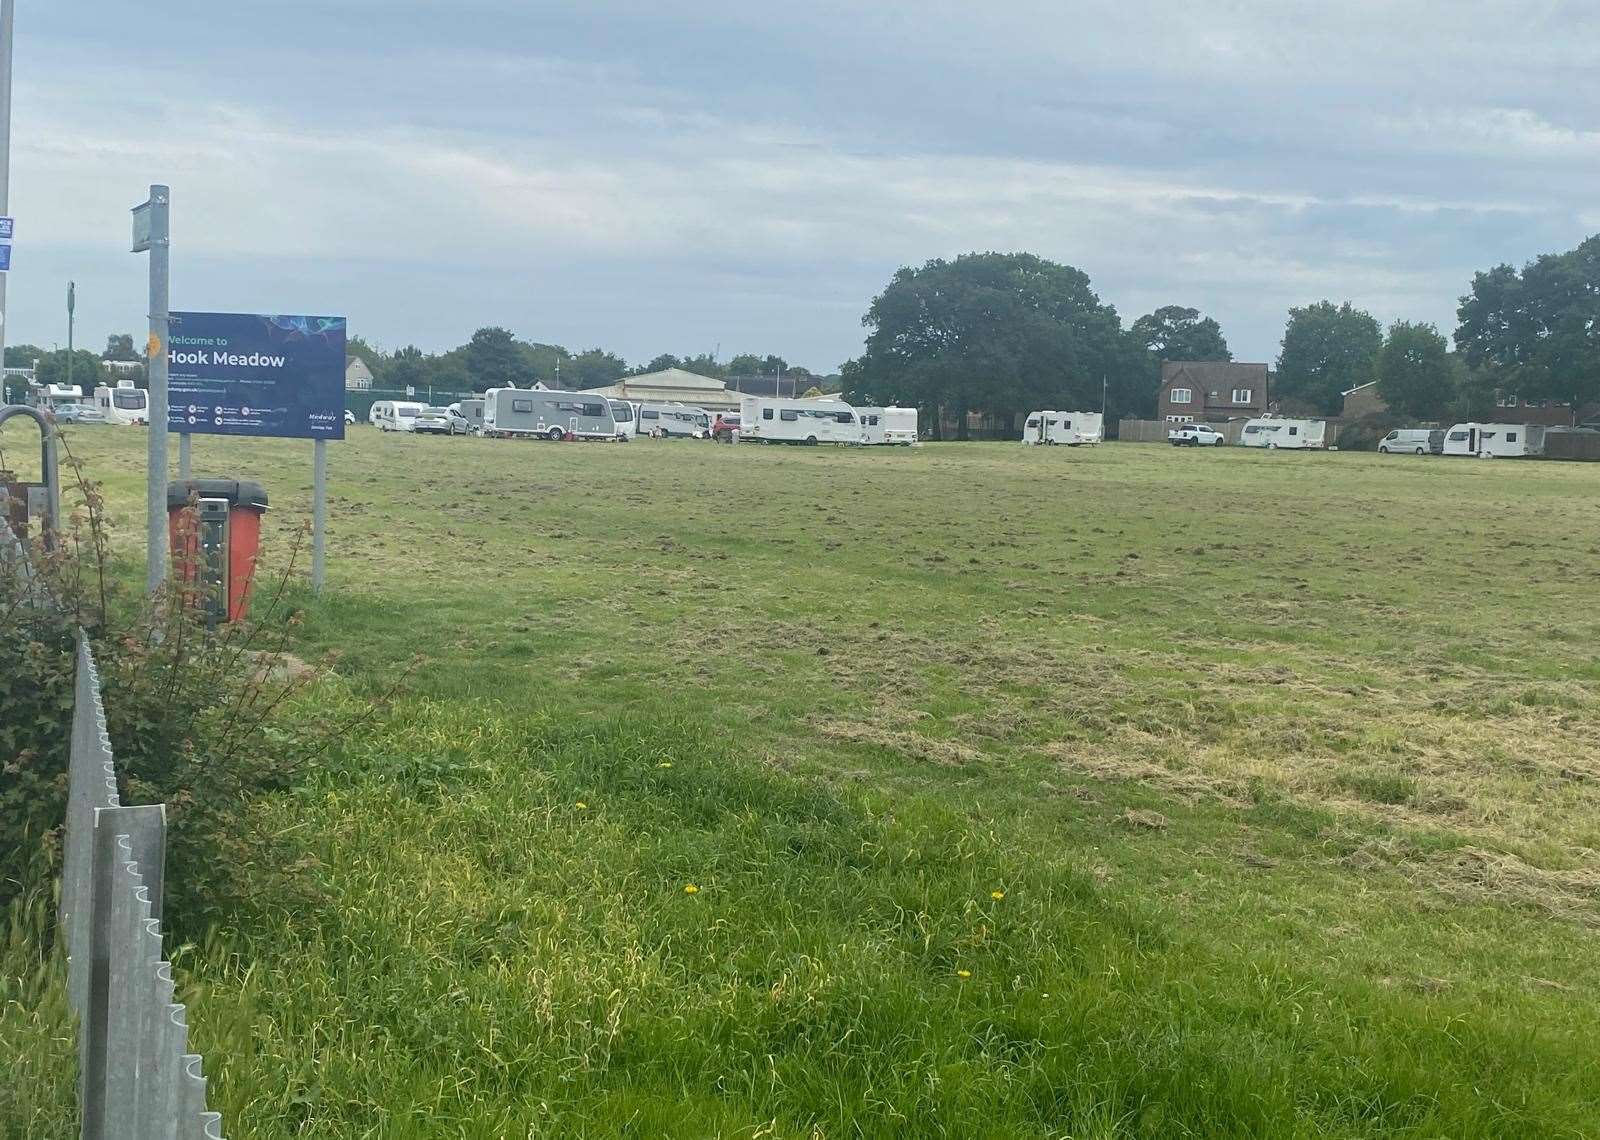 Up to 25 caravans have descended on Hook Meadow in Walderslade Road, Chatham